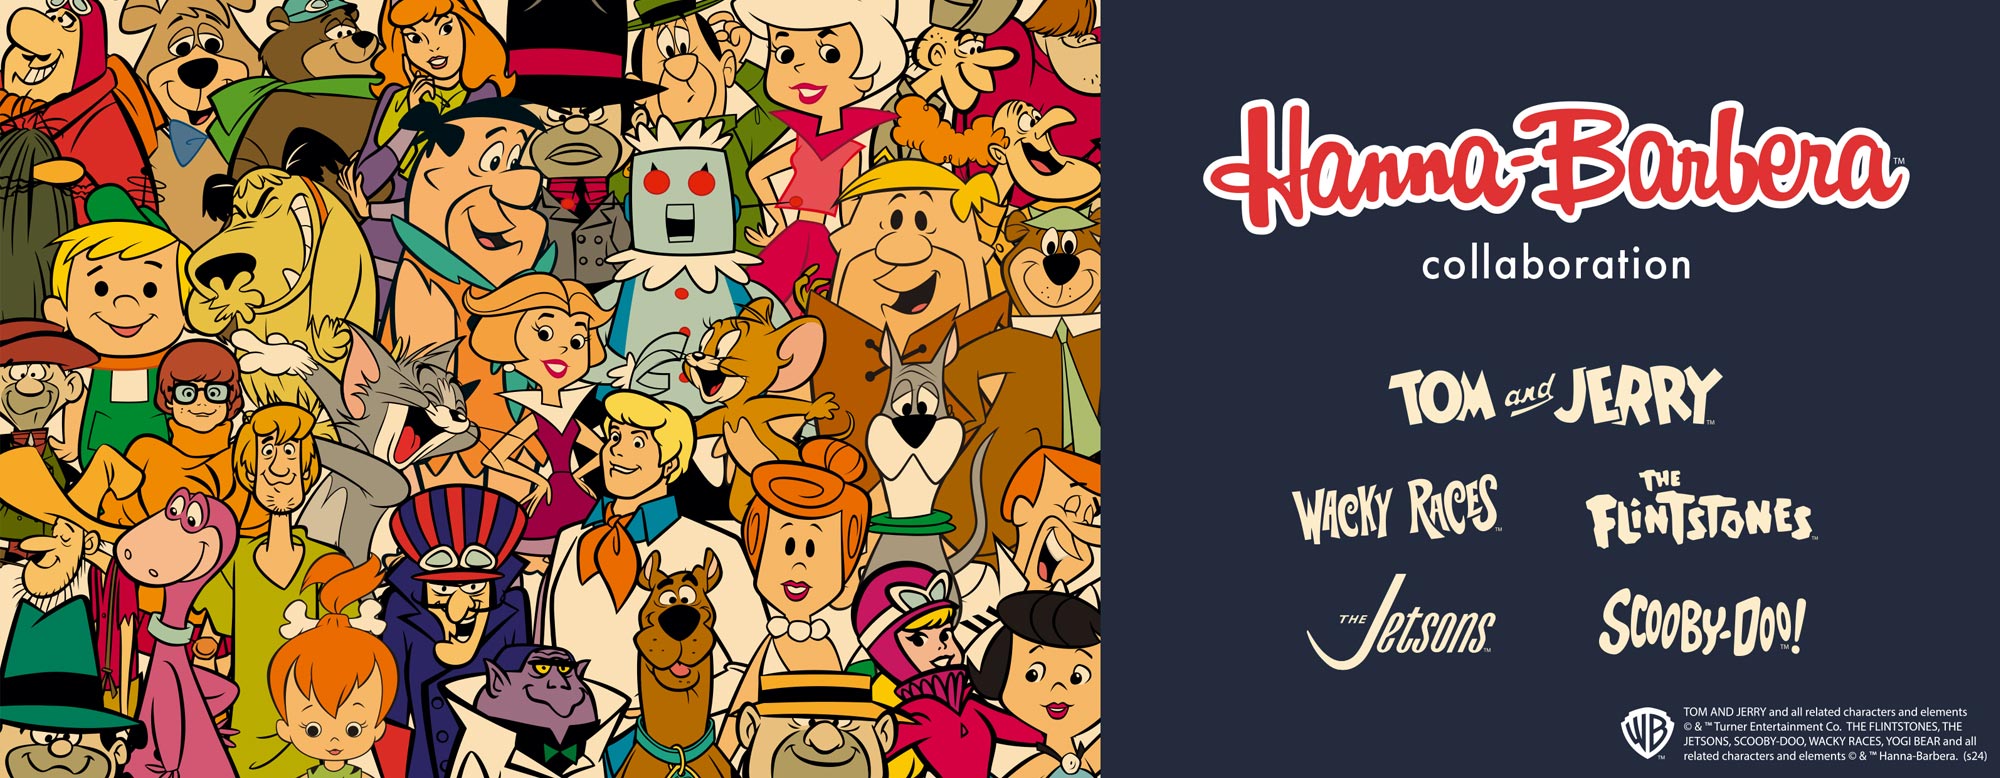 Hanna-Barbera collaboration